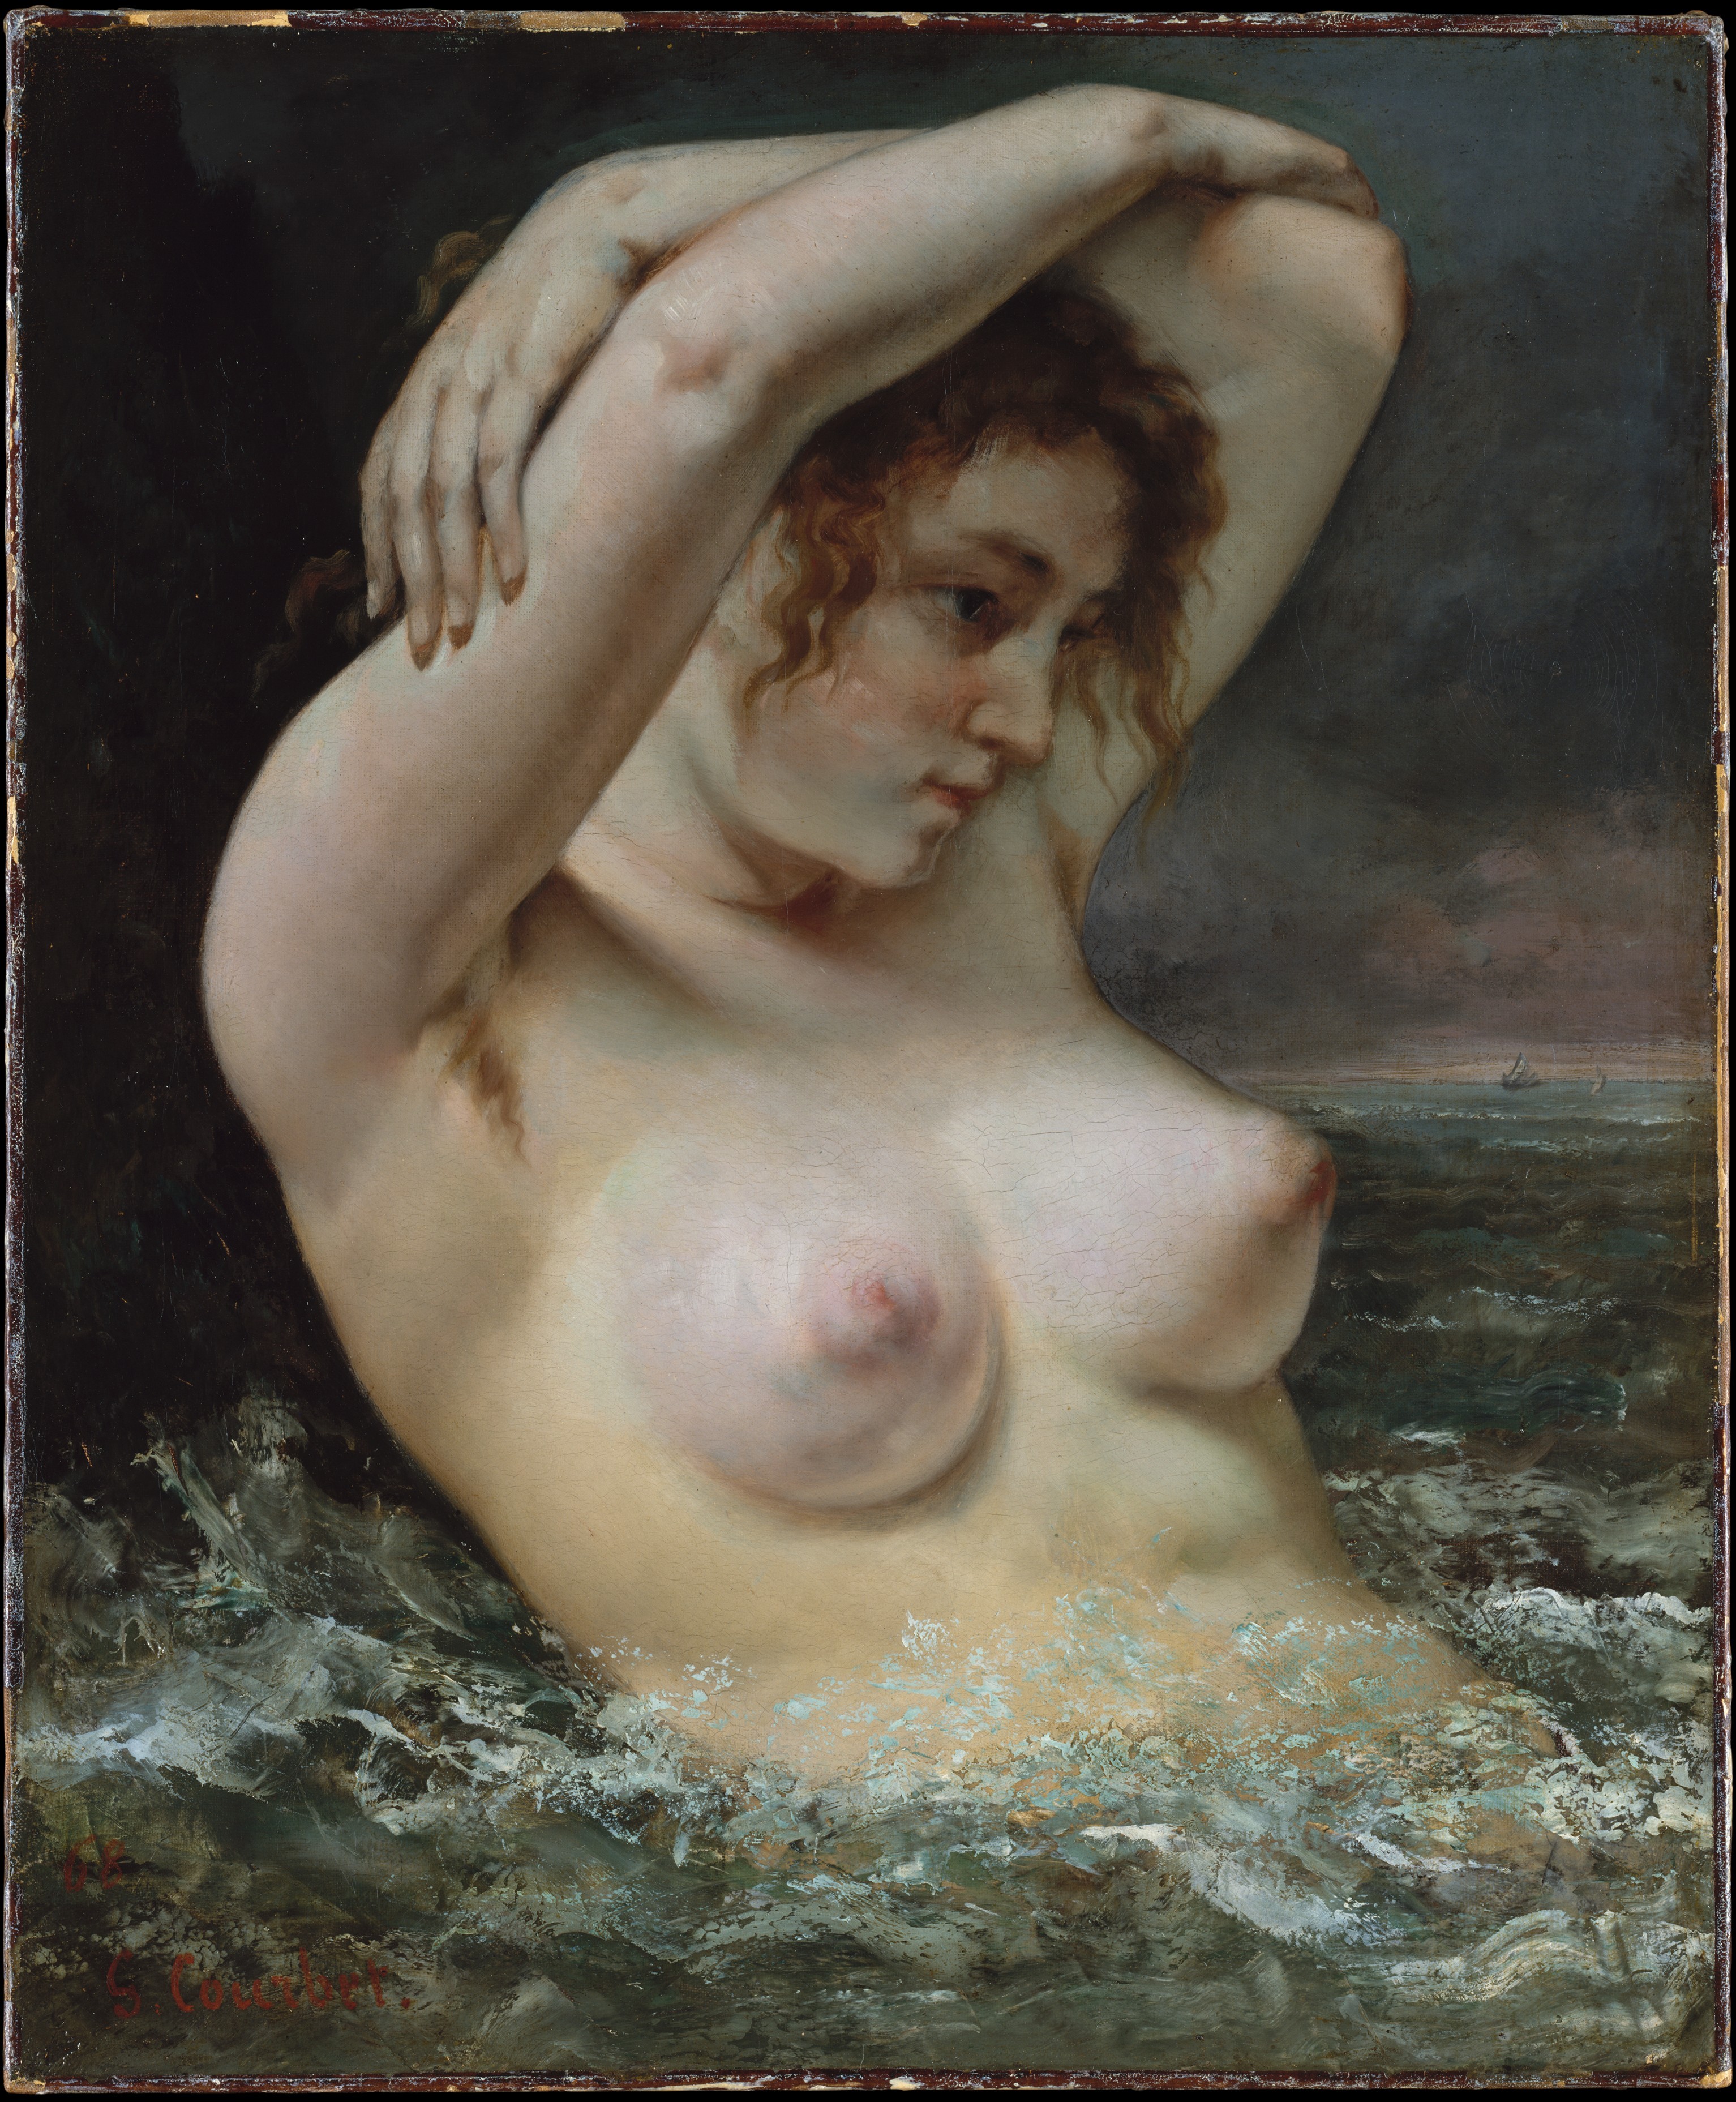 La donna tra le onde by Gustave Courbet - 1868 - 65.4 x 54 cm 